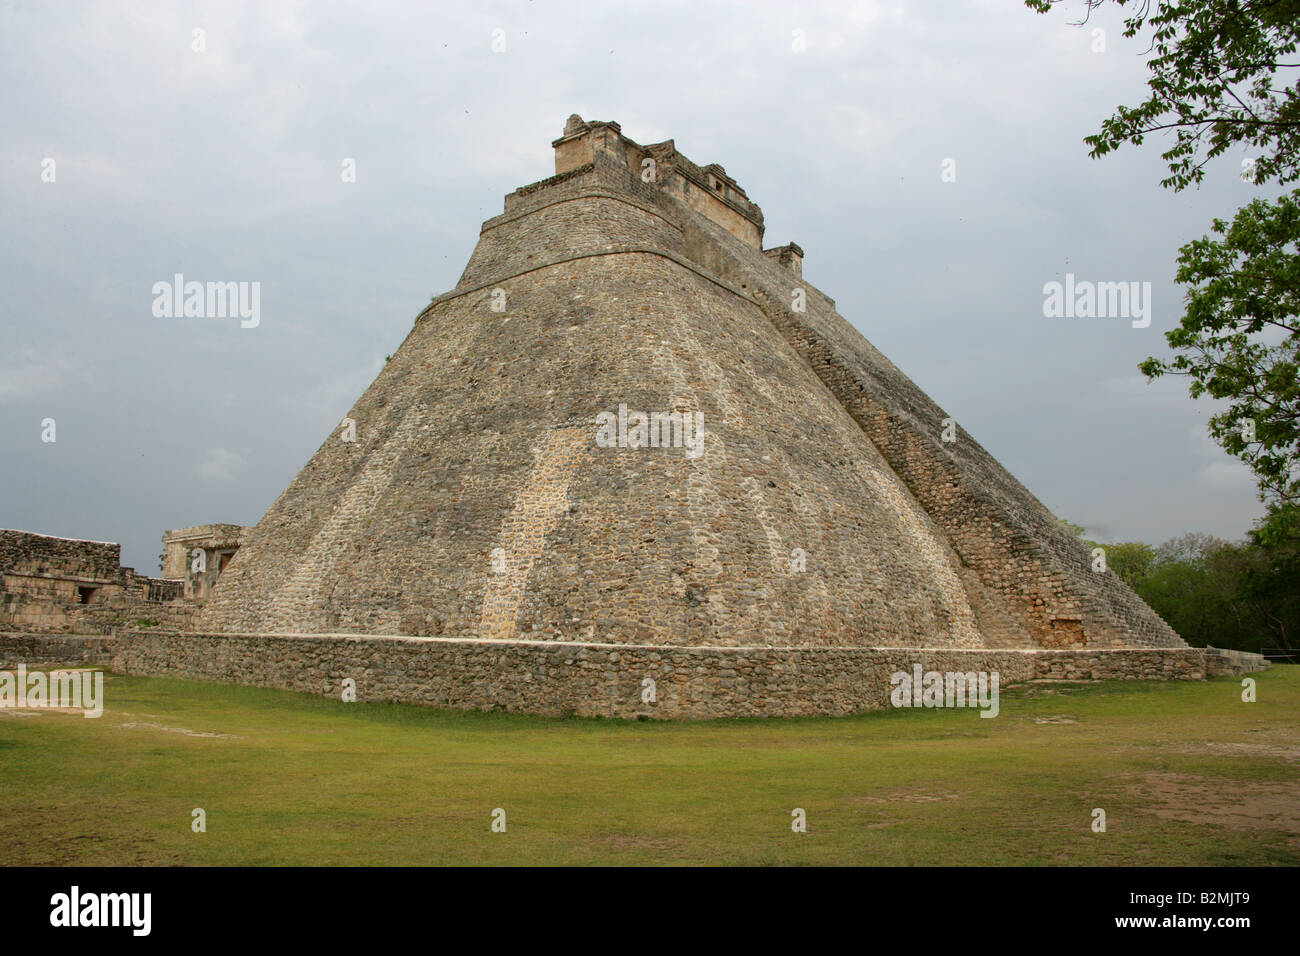 Pyramid of the Magicians, Uxmal Archeological Site, Yucatan Peninsular, Mexico. Stock Photo